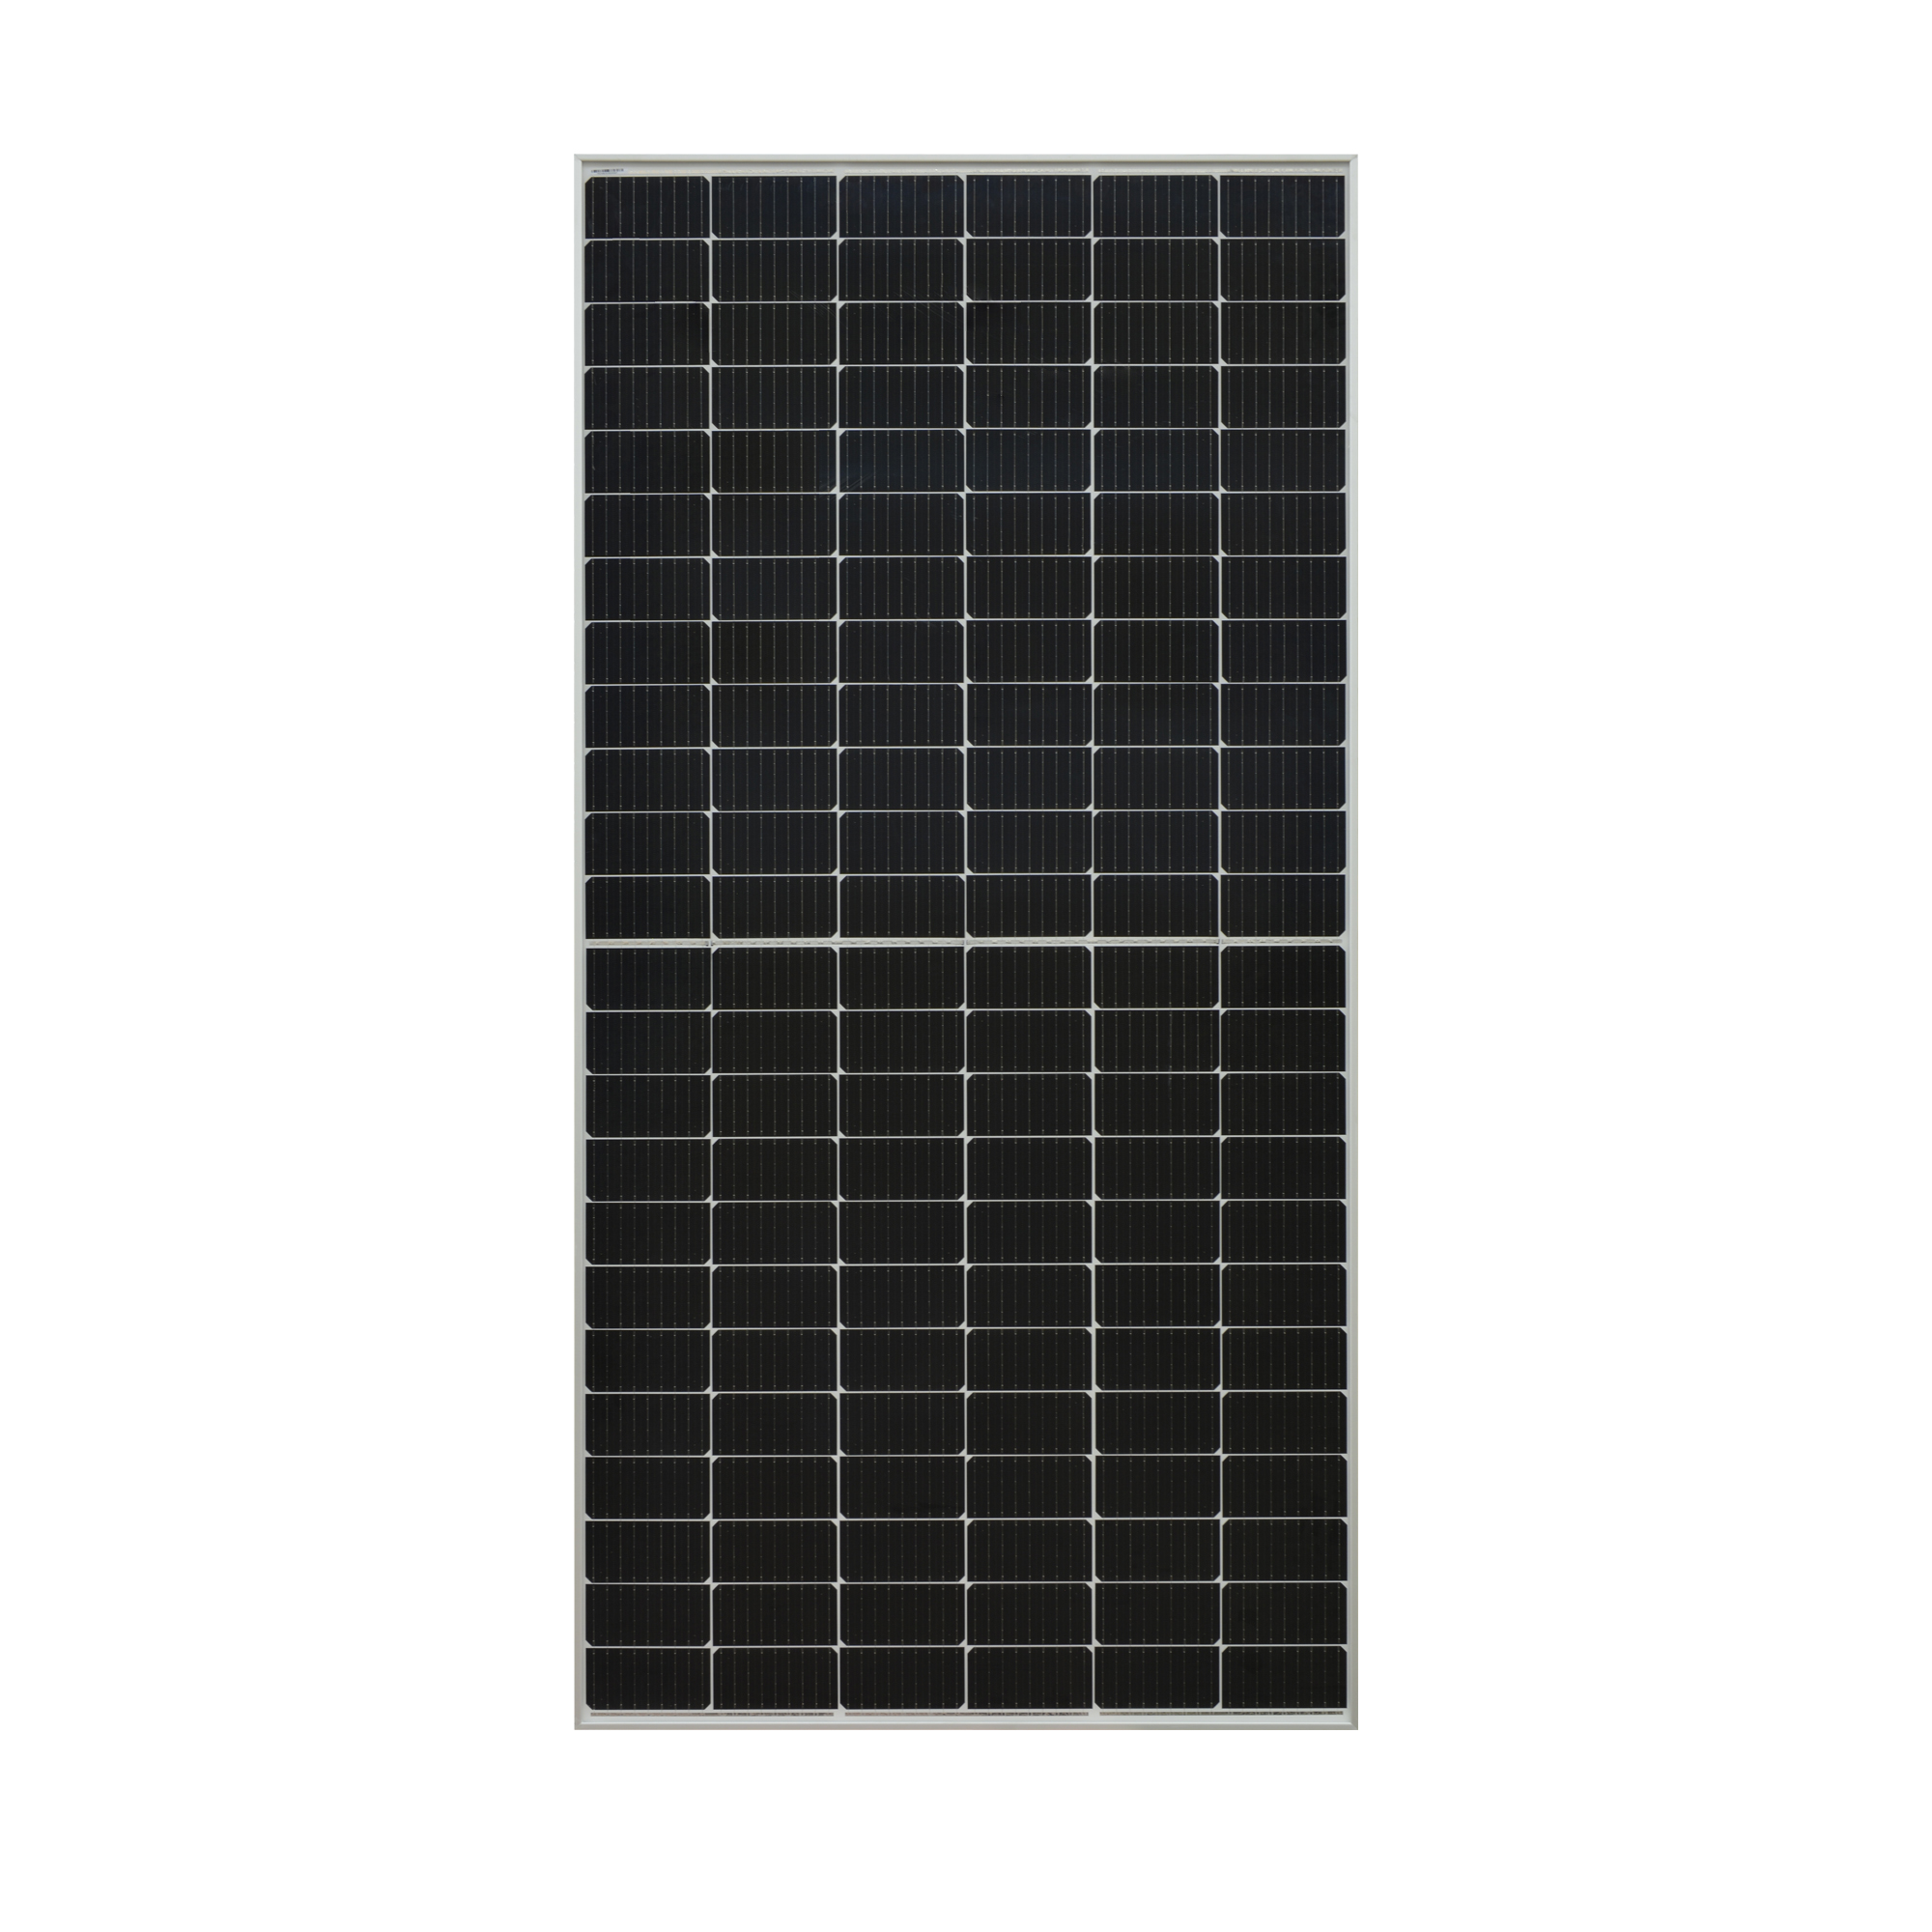 450W monokristallines Off-Grid-Solarsystem-Panel für Haus-Photovoltaik-Solarpanel 